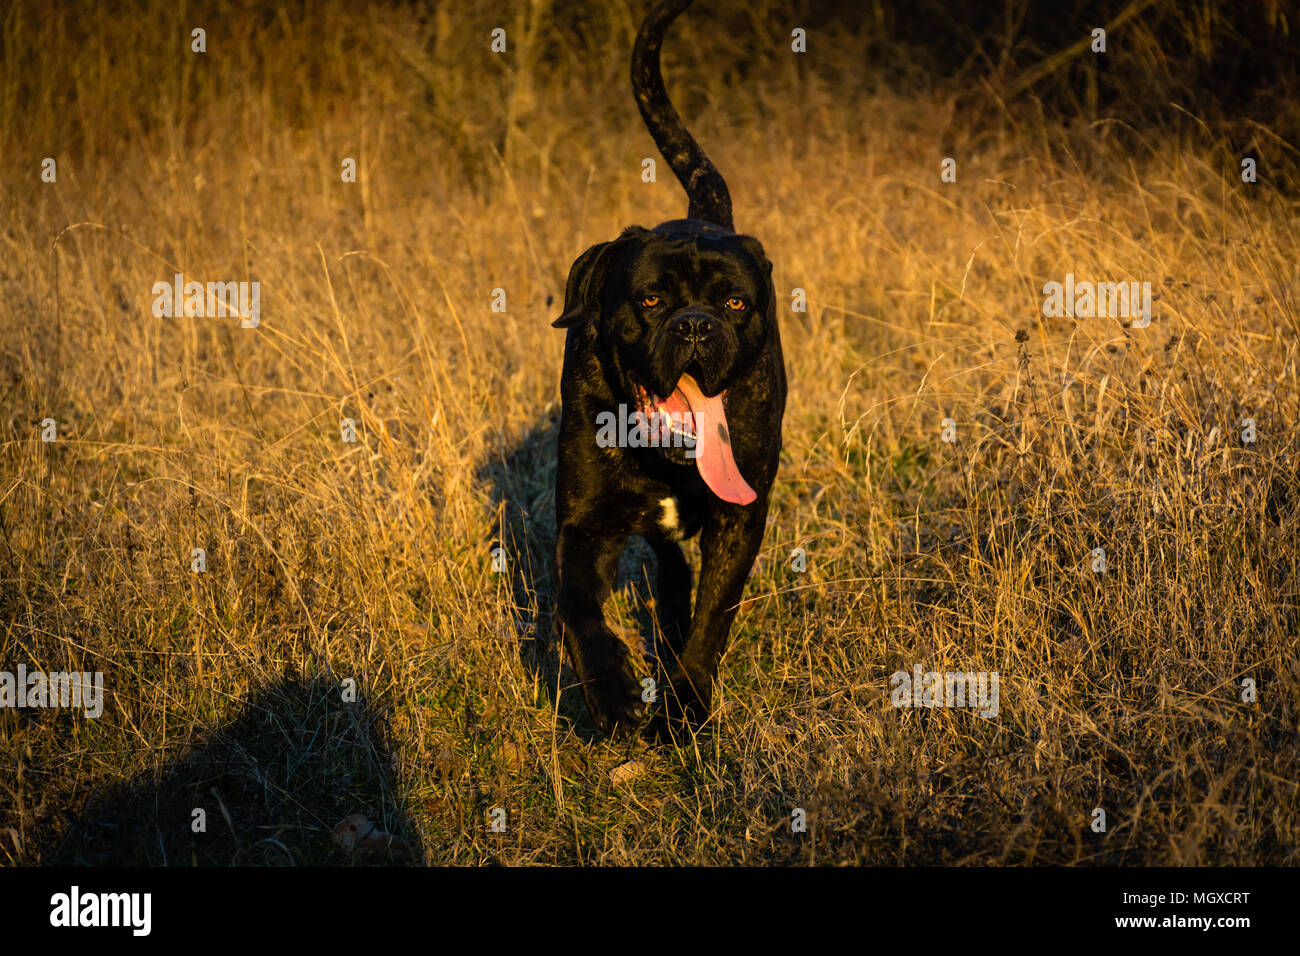 Gran perro negro cane corso (mastín italiano) caminando en un campo, con lanza larga Foto de stock